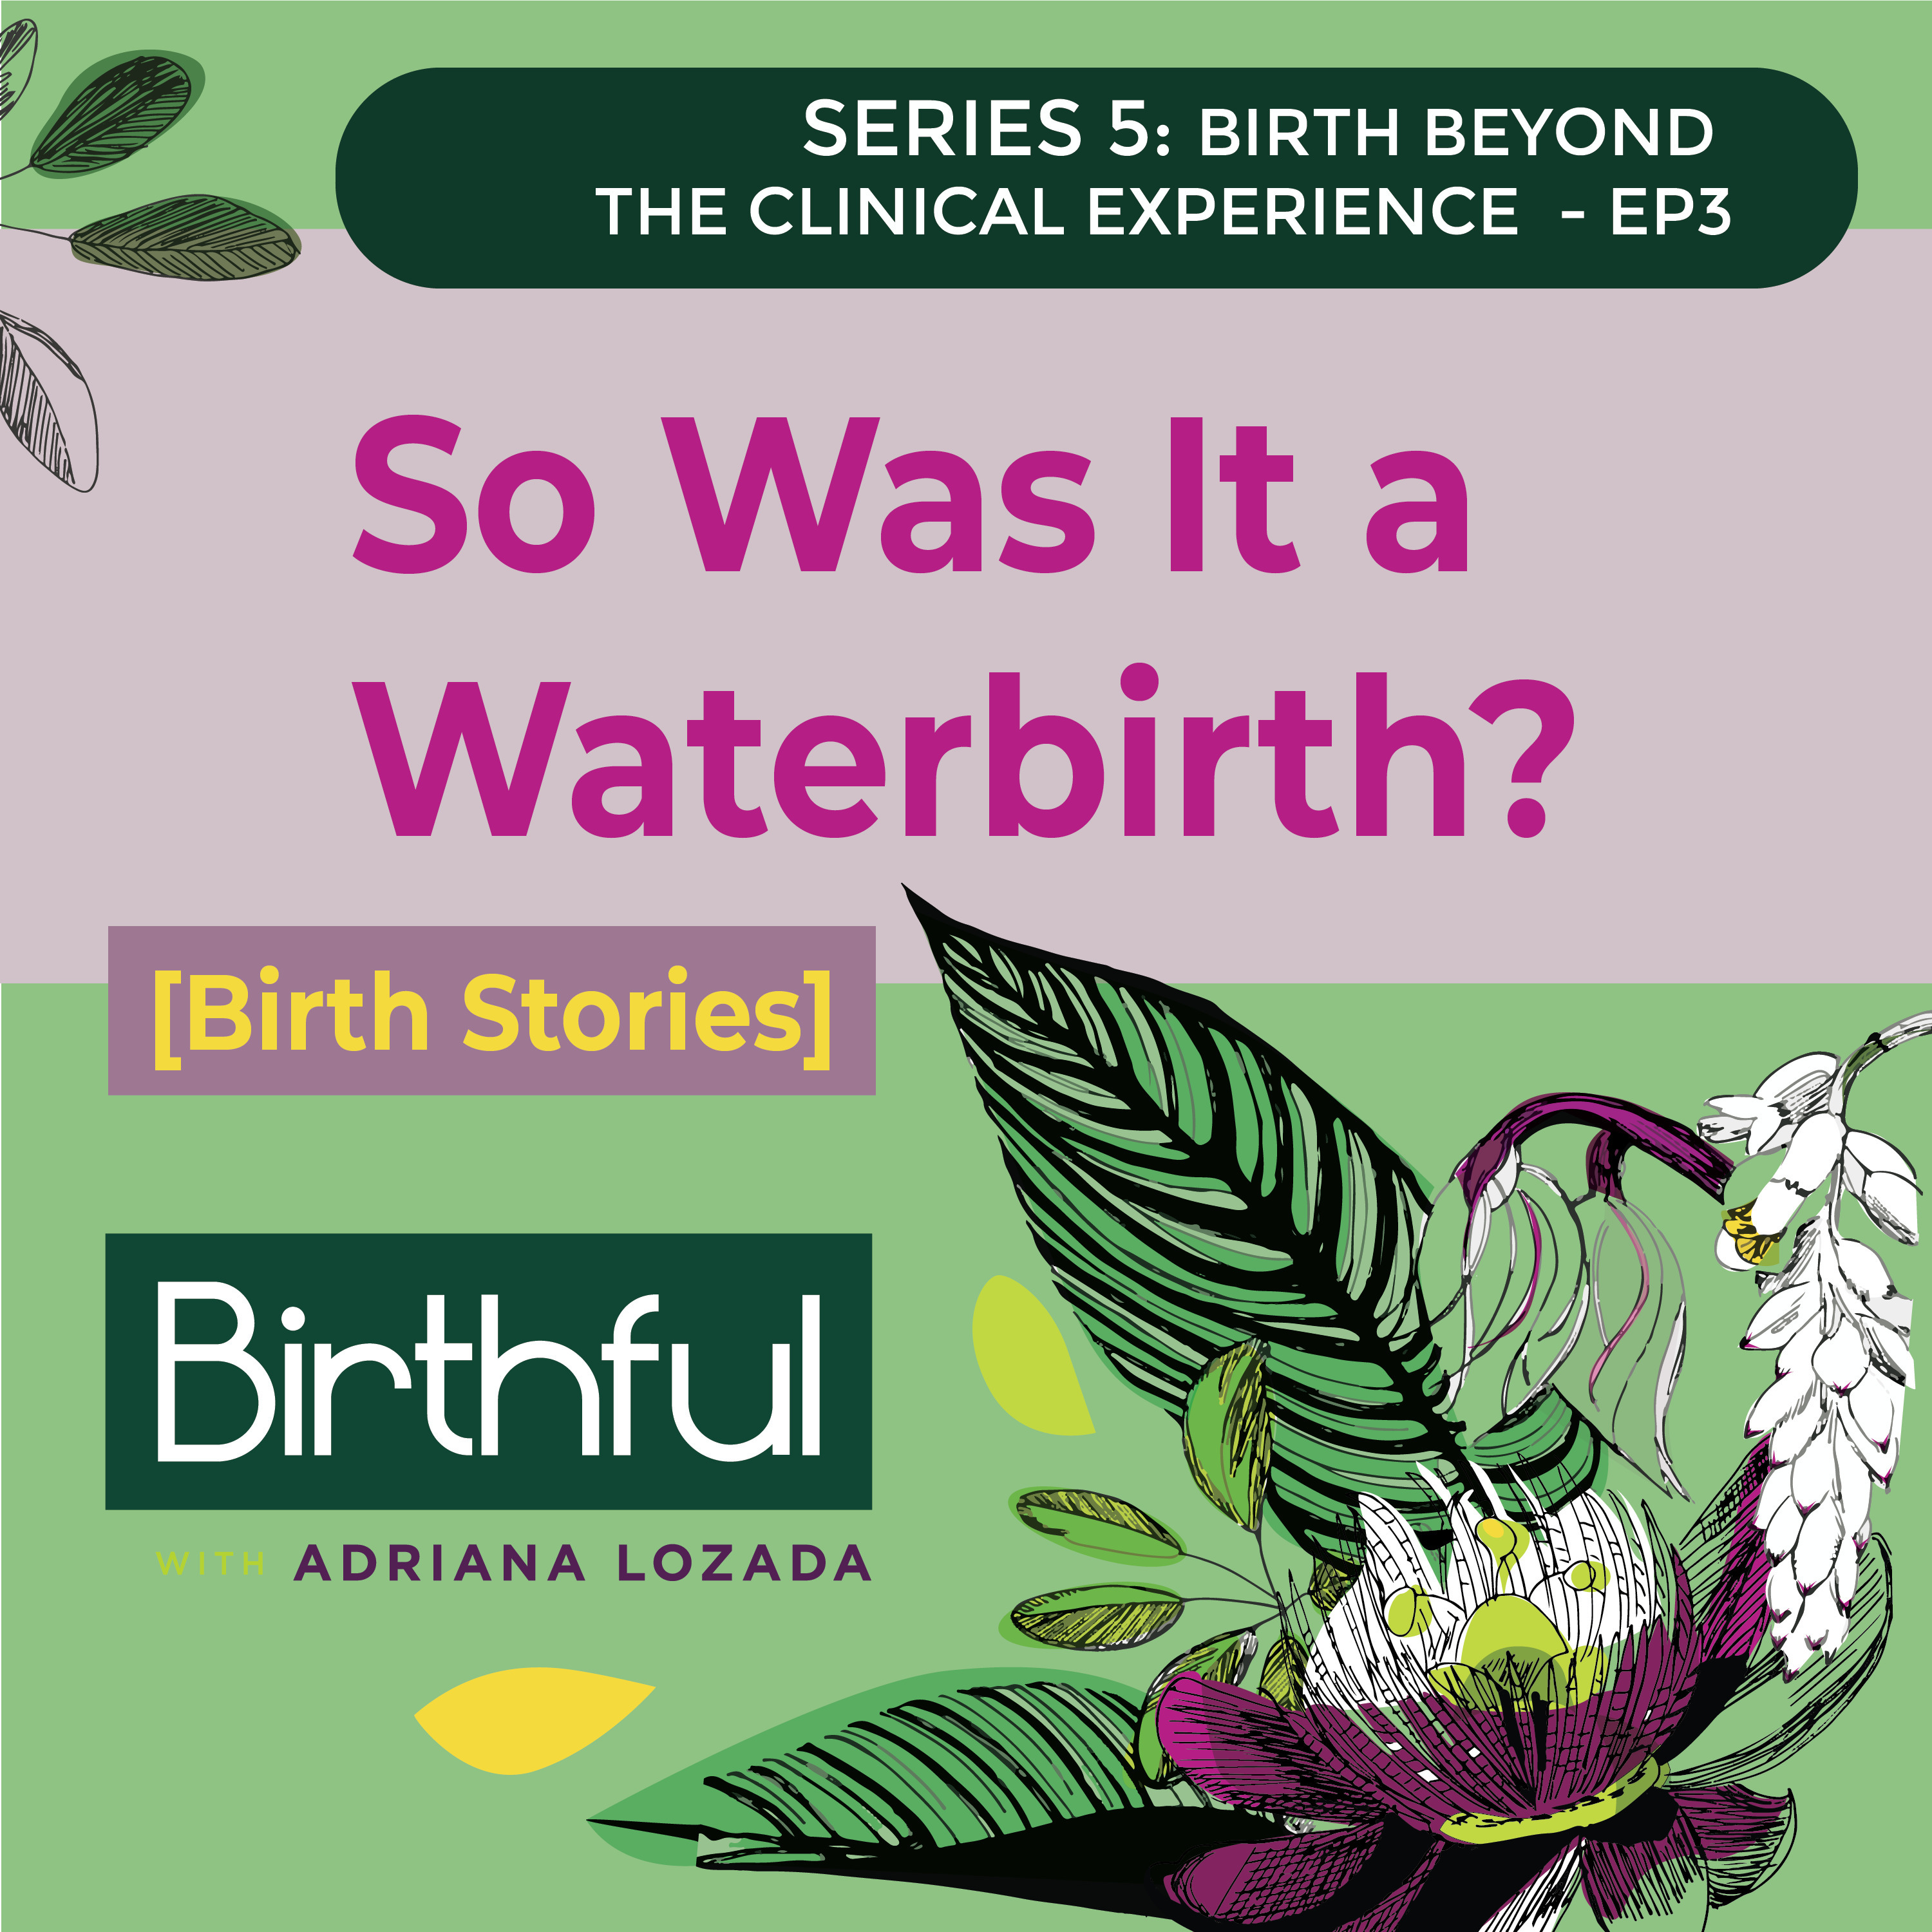 [Birth Stories] So Was It a Waterbirth?